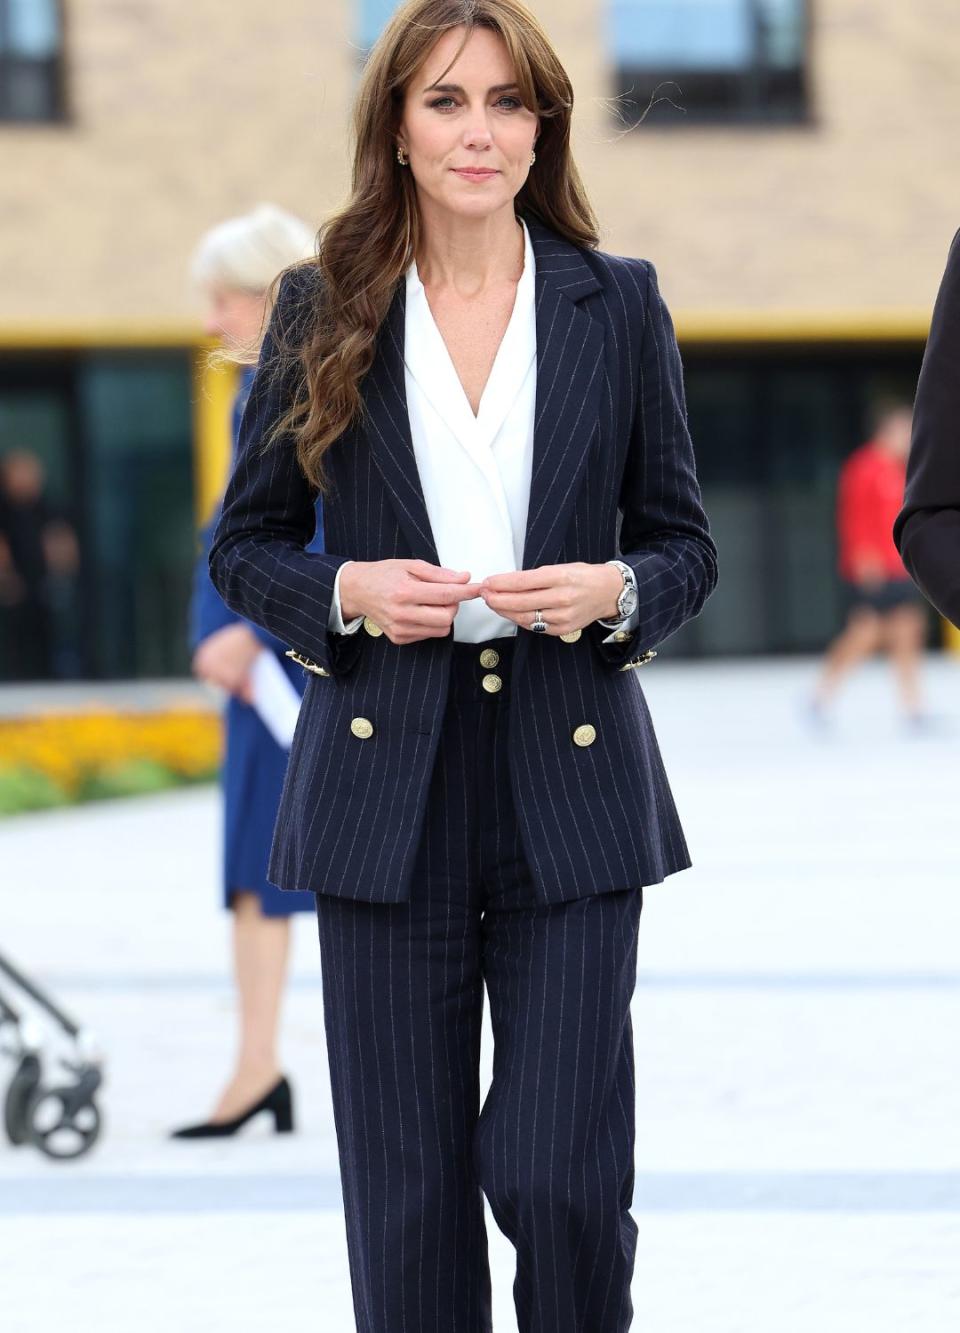 Kate Middleton's pinstripe power suit